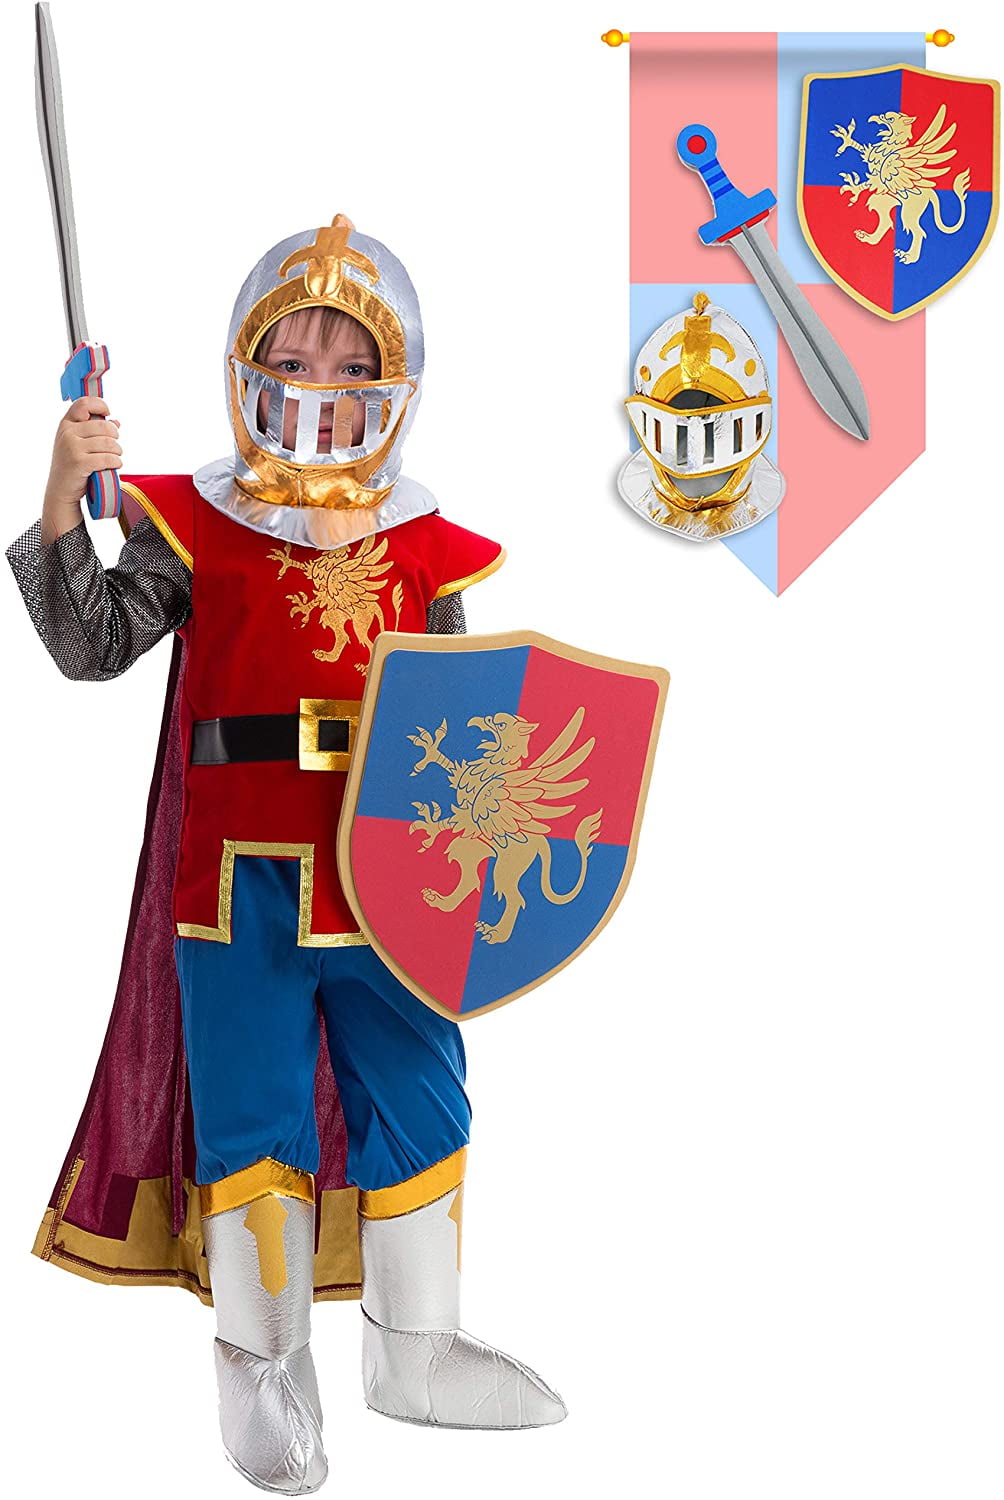 Valiant Knight Medieval Camelot men's fancy dress costume 5 piece set Deluxe 